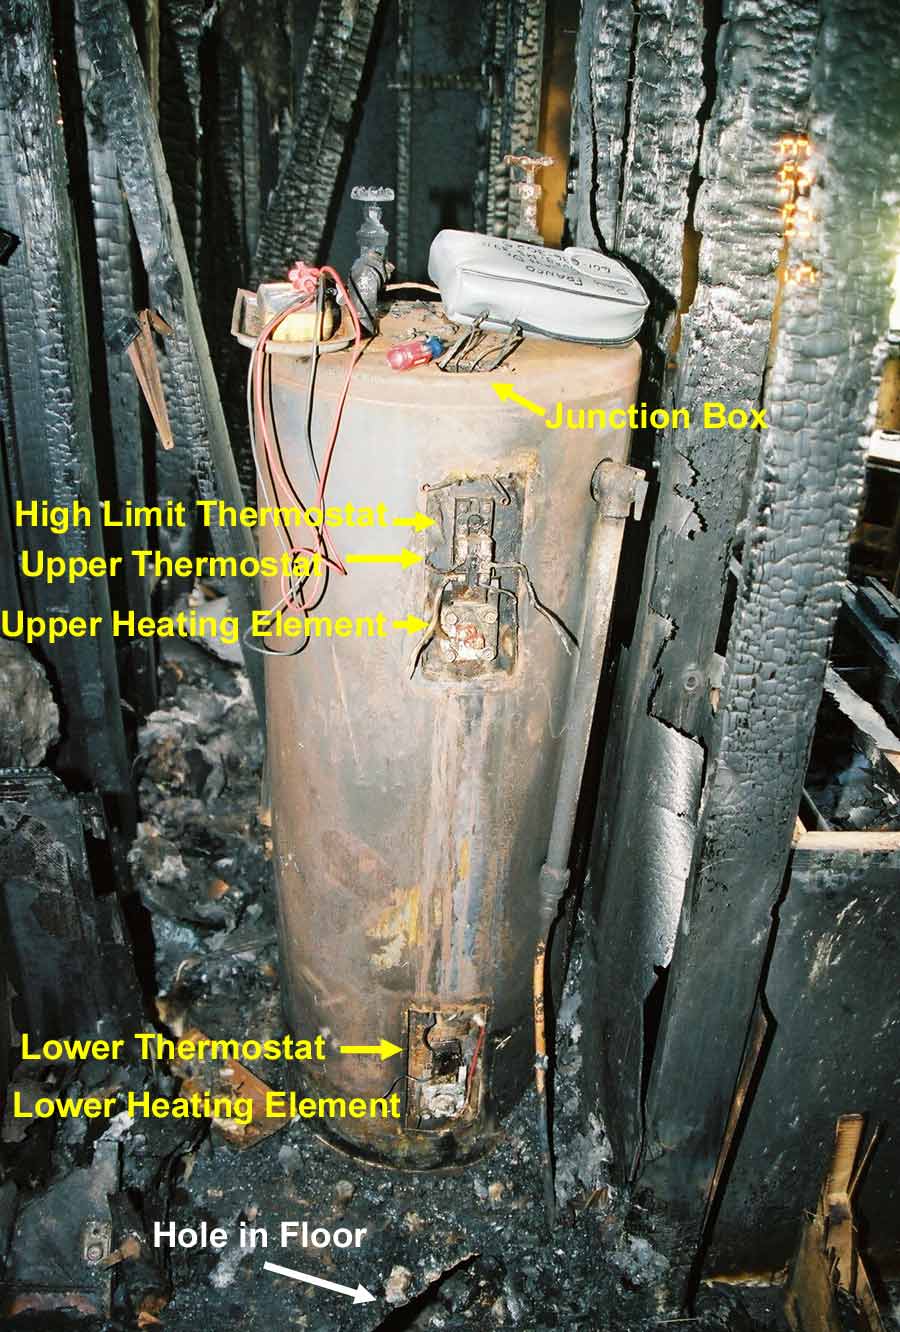 https://www.electrical-forensics.com/WaterHeaters/F03-14/HotWaterTank-LG.jpg